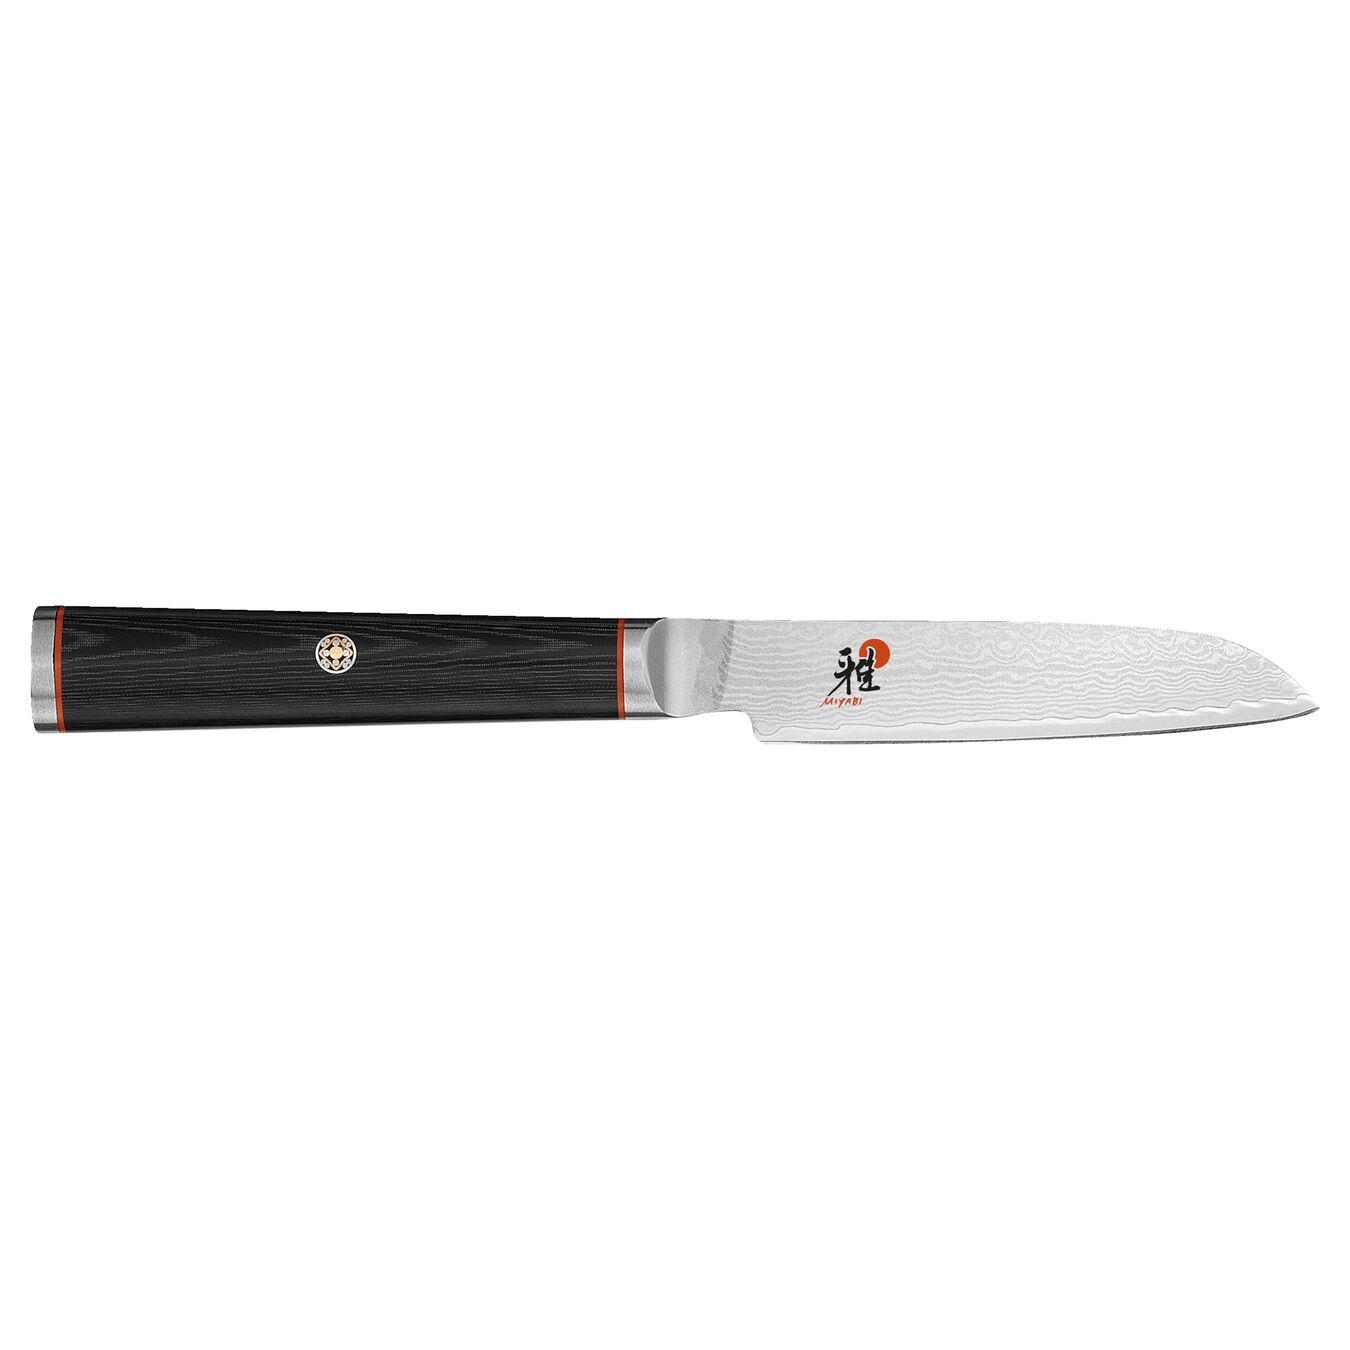 3.5-inch micarta Straight Paring Knife,,large 1